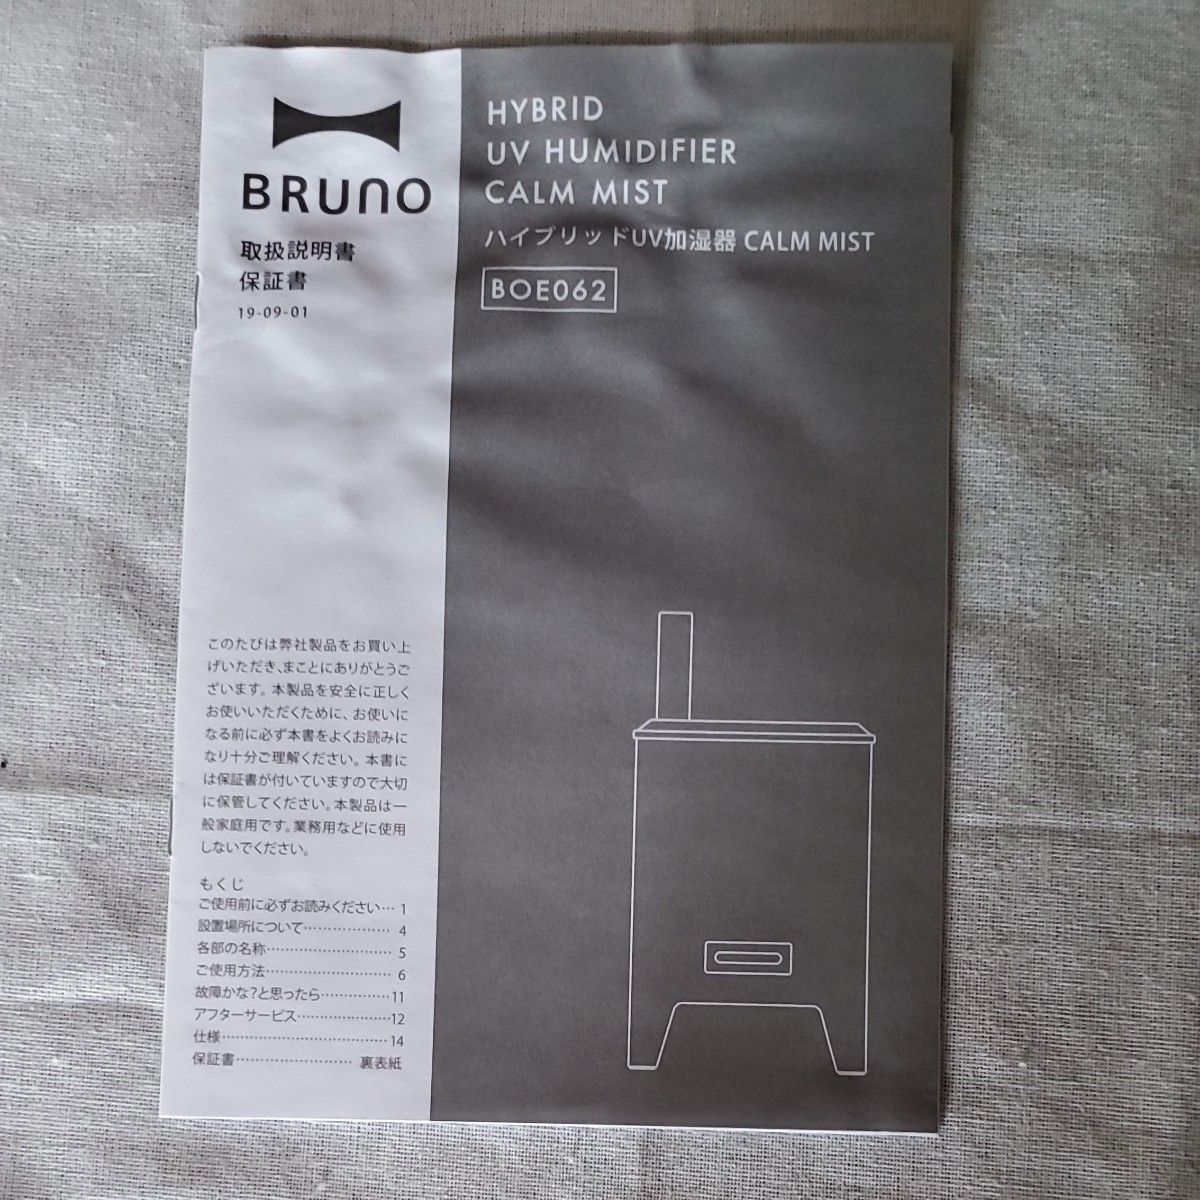  BRUNO ハイブリッドUV加湿器 CALM MIST BOE062-BK（ブラック）&新品フィルター